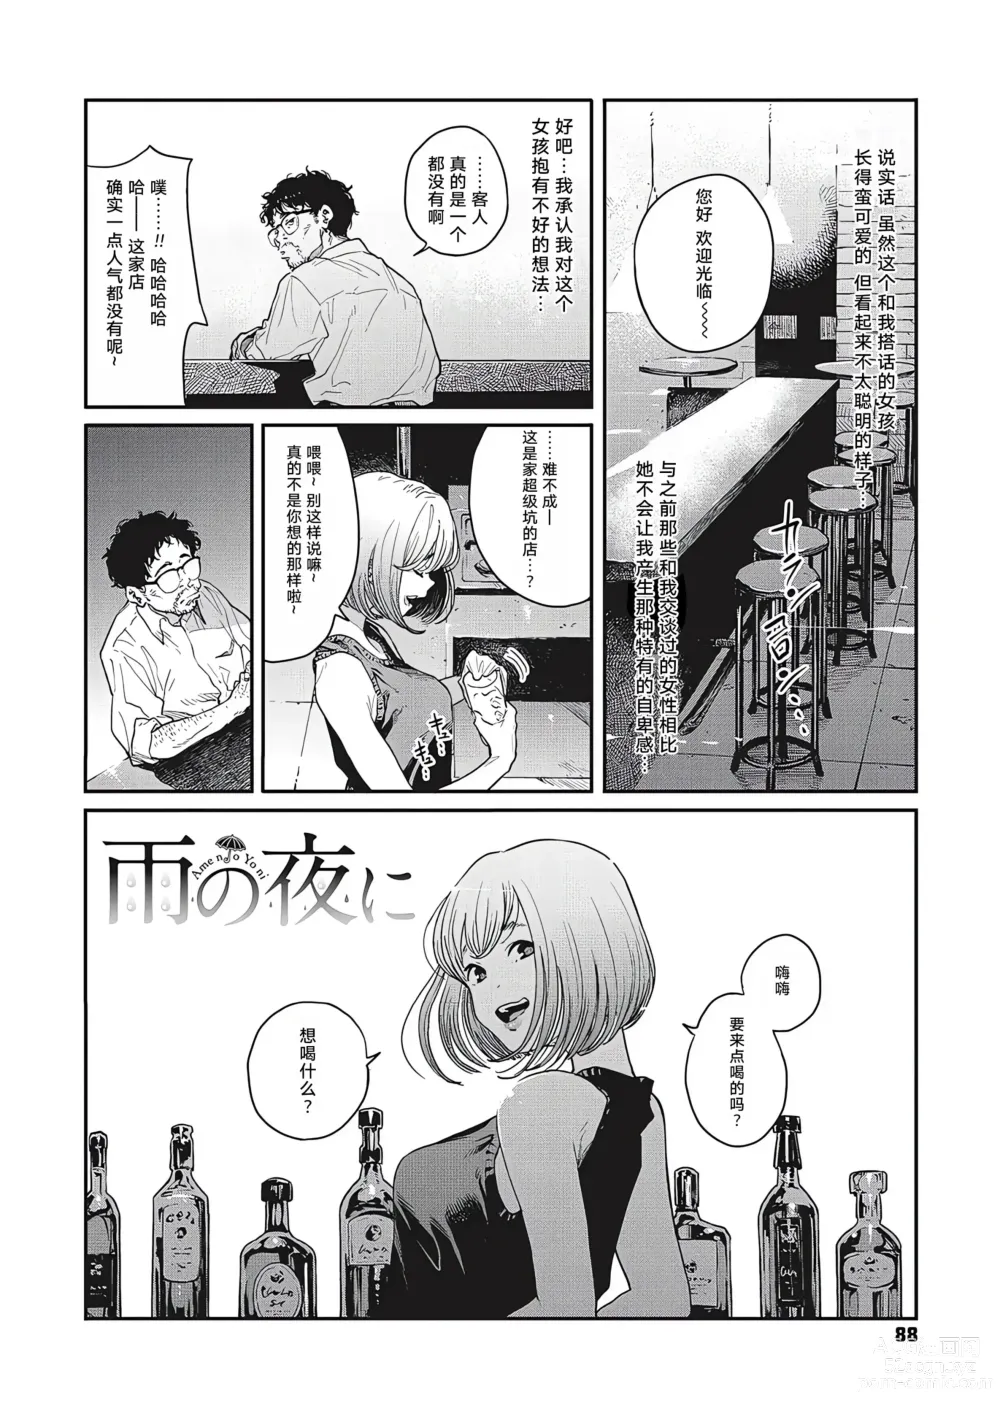 Page 2 of manga 雨夜里